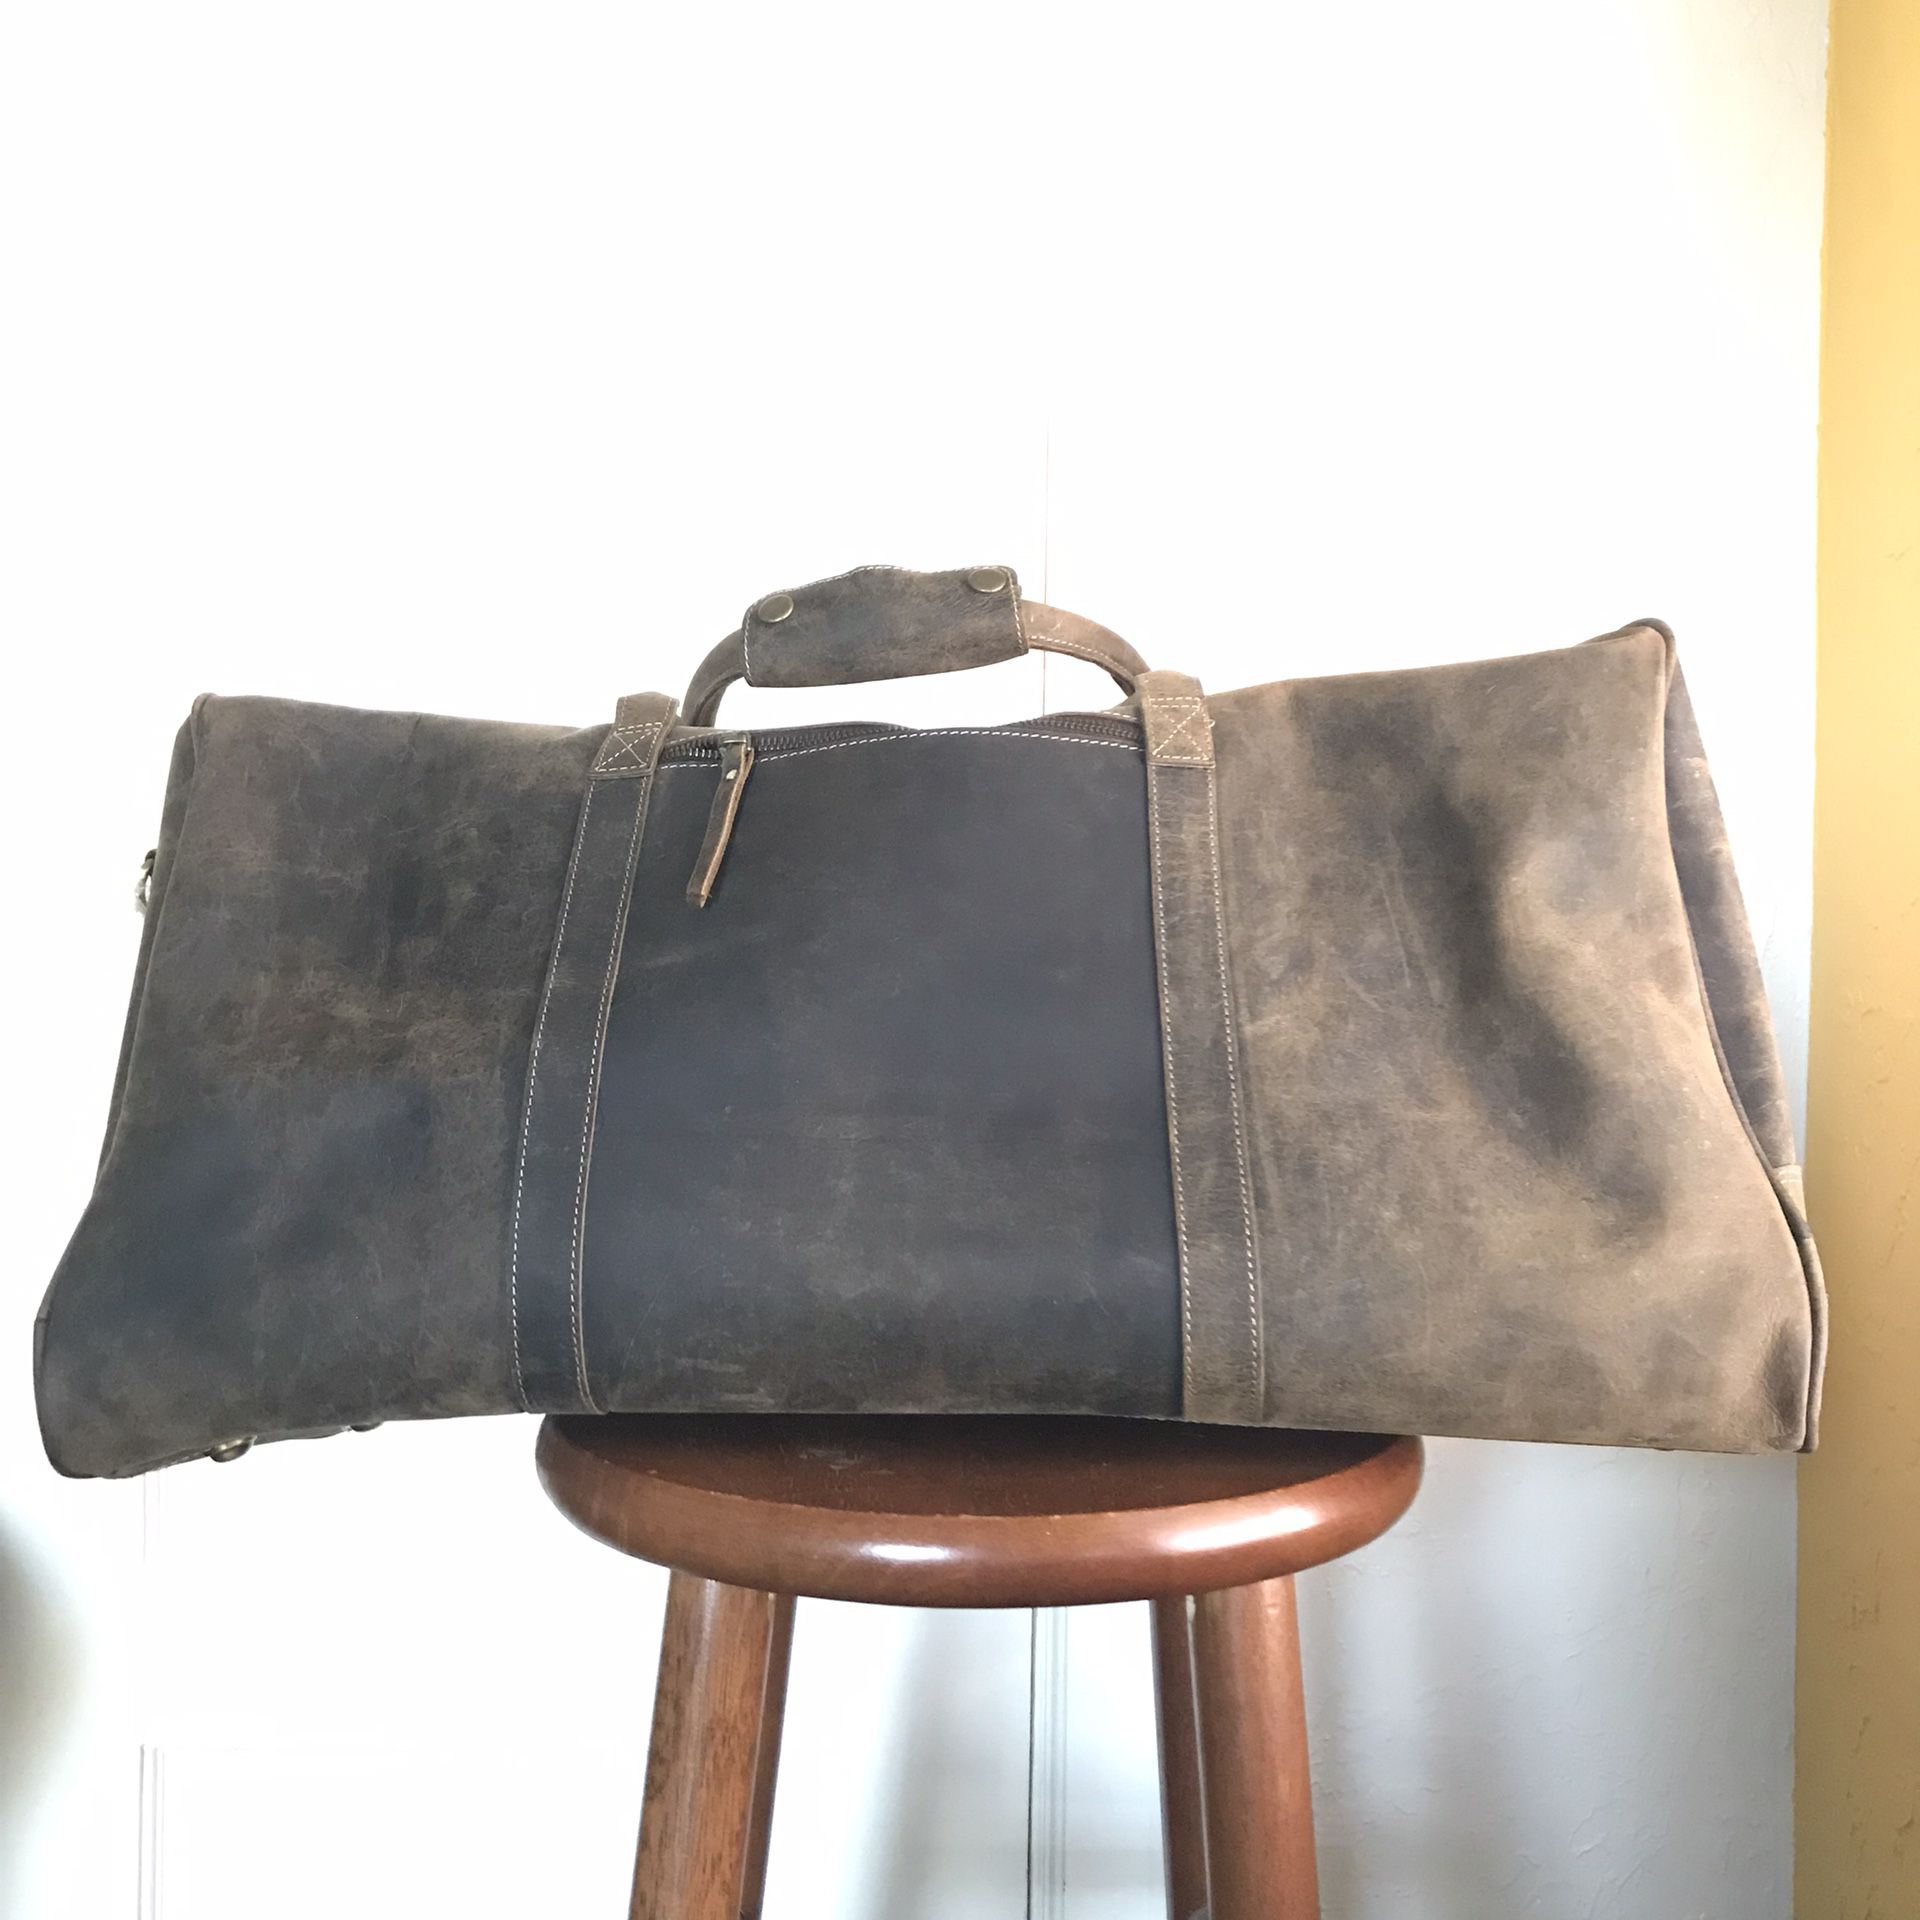 Polare Mens Full Grain Leather Duffel Bag Overnight Travel Duffle Weekender Bag 23.2'' with YKK Metal Zippers